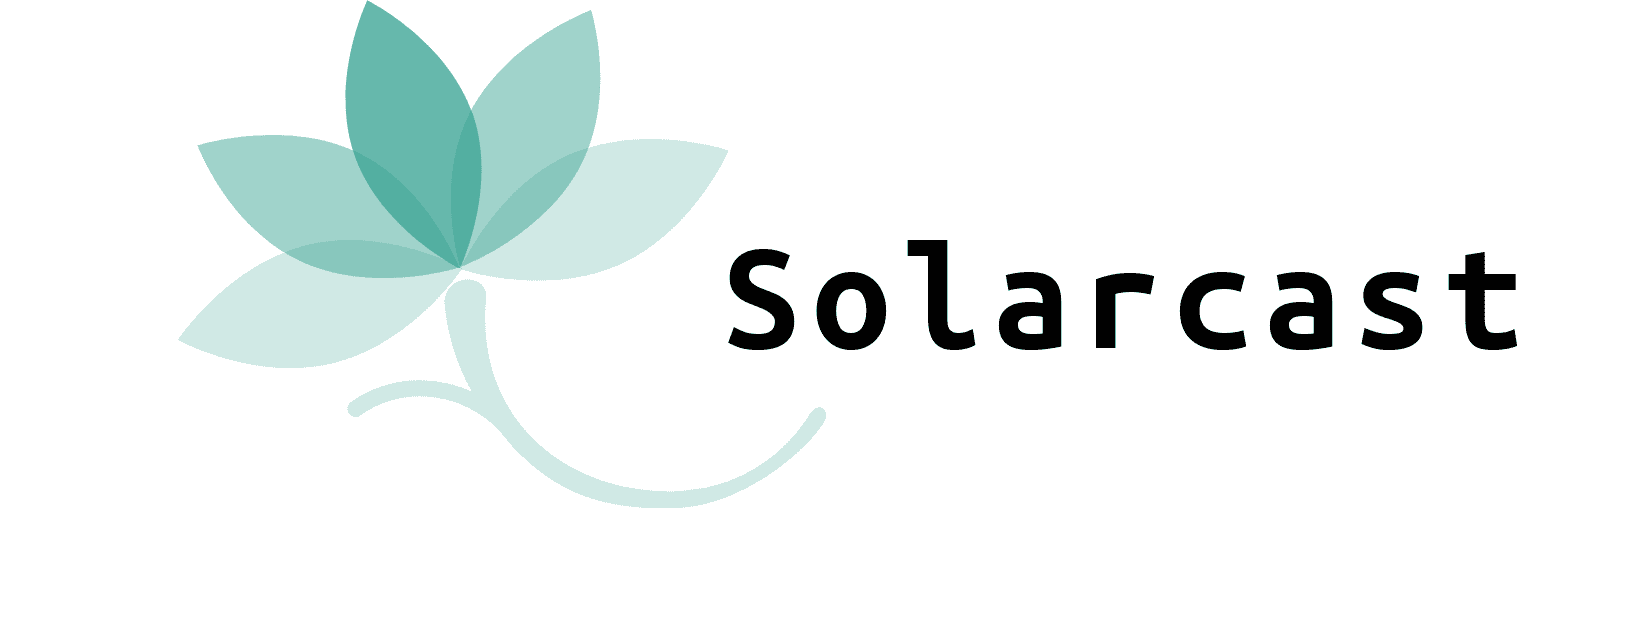 Solarcast